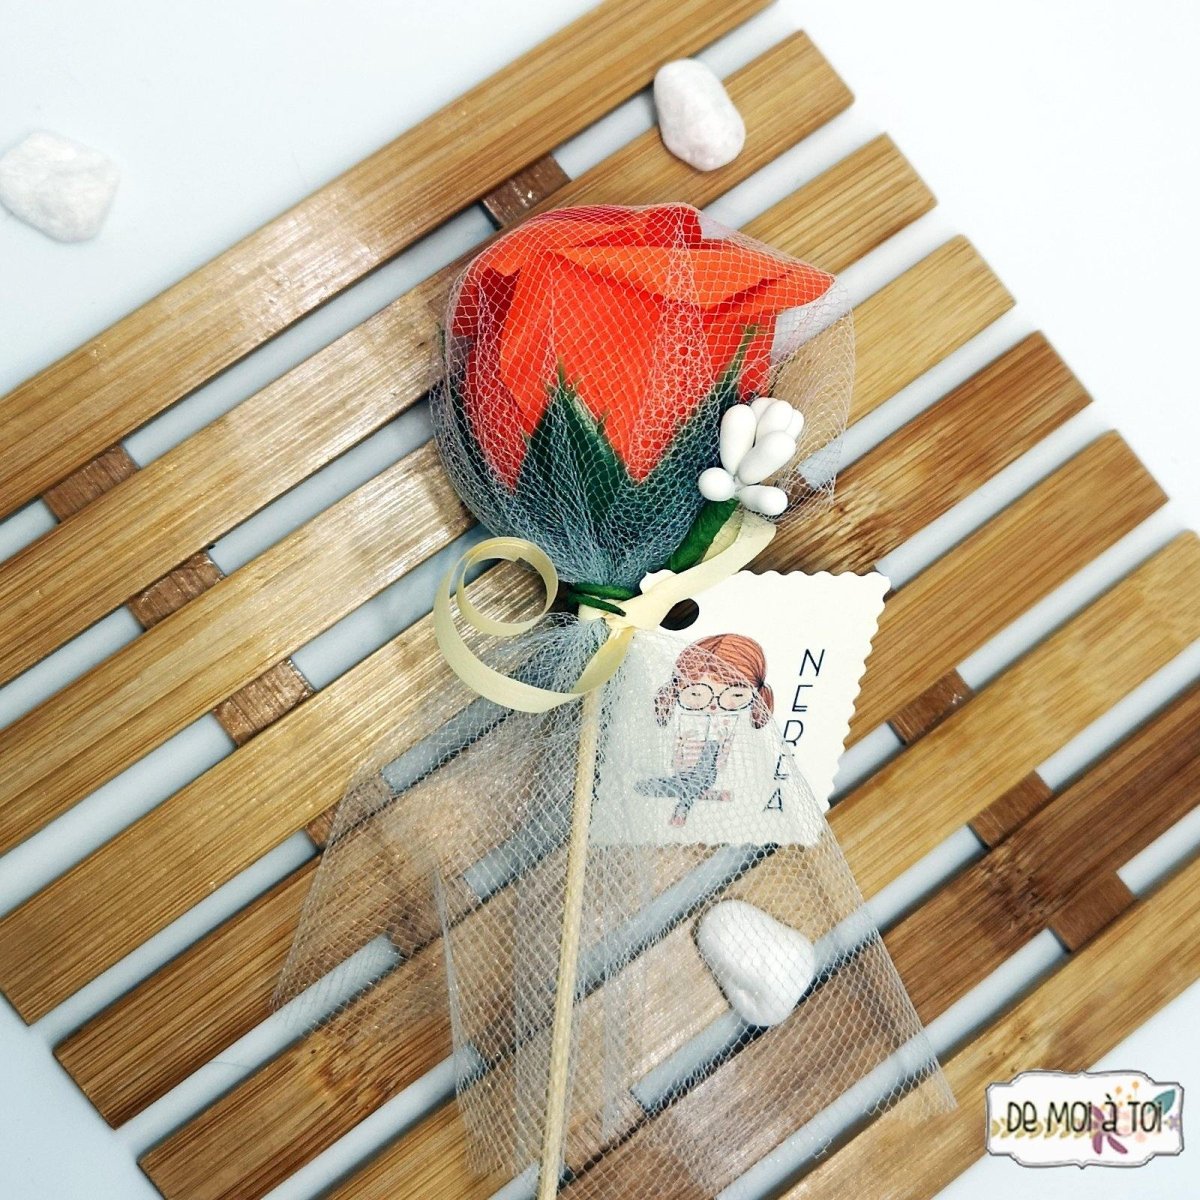 Rosa eterna de jabón - Envuelta en tul - Regalos originales personalizados - DE MOI À TOI |DMAT